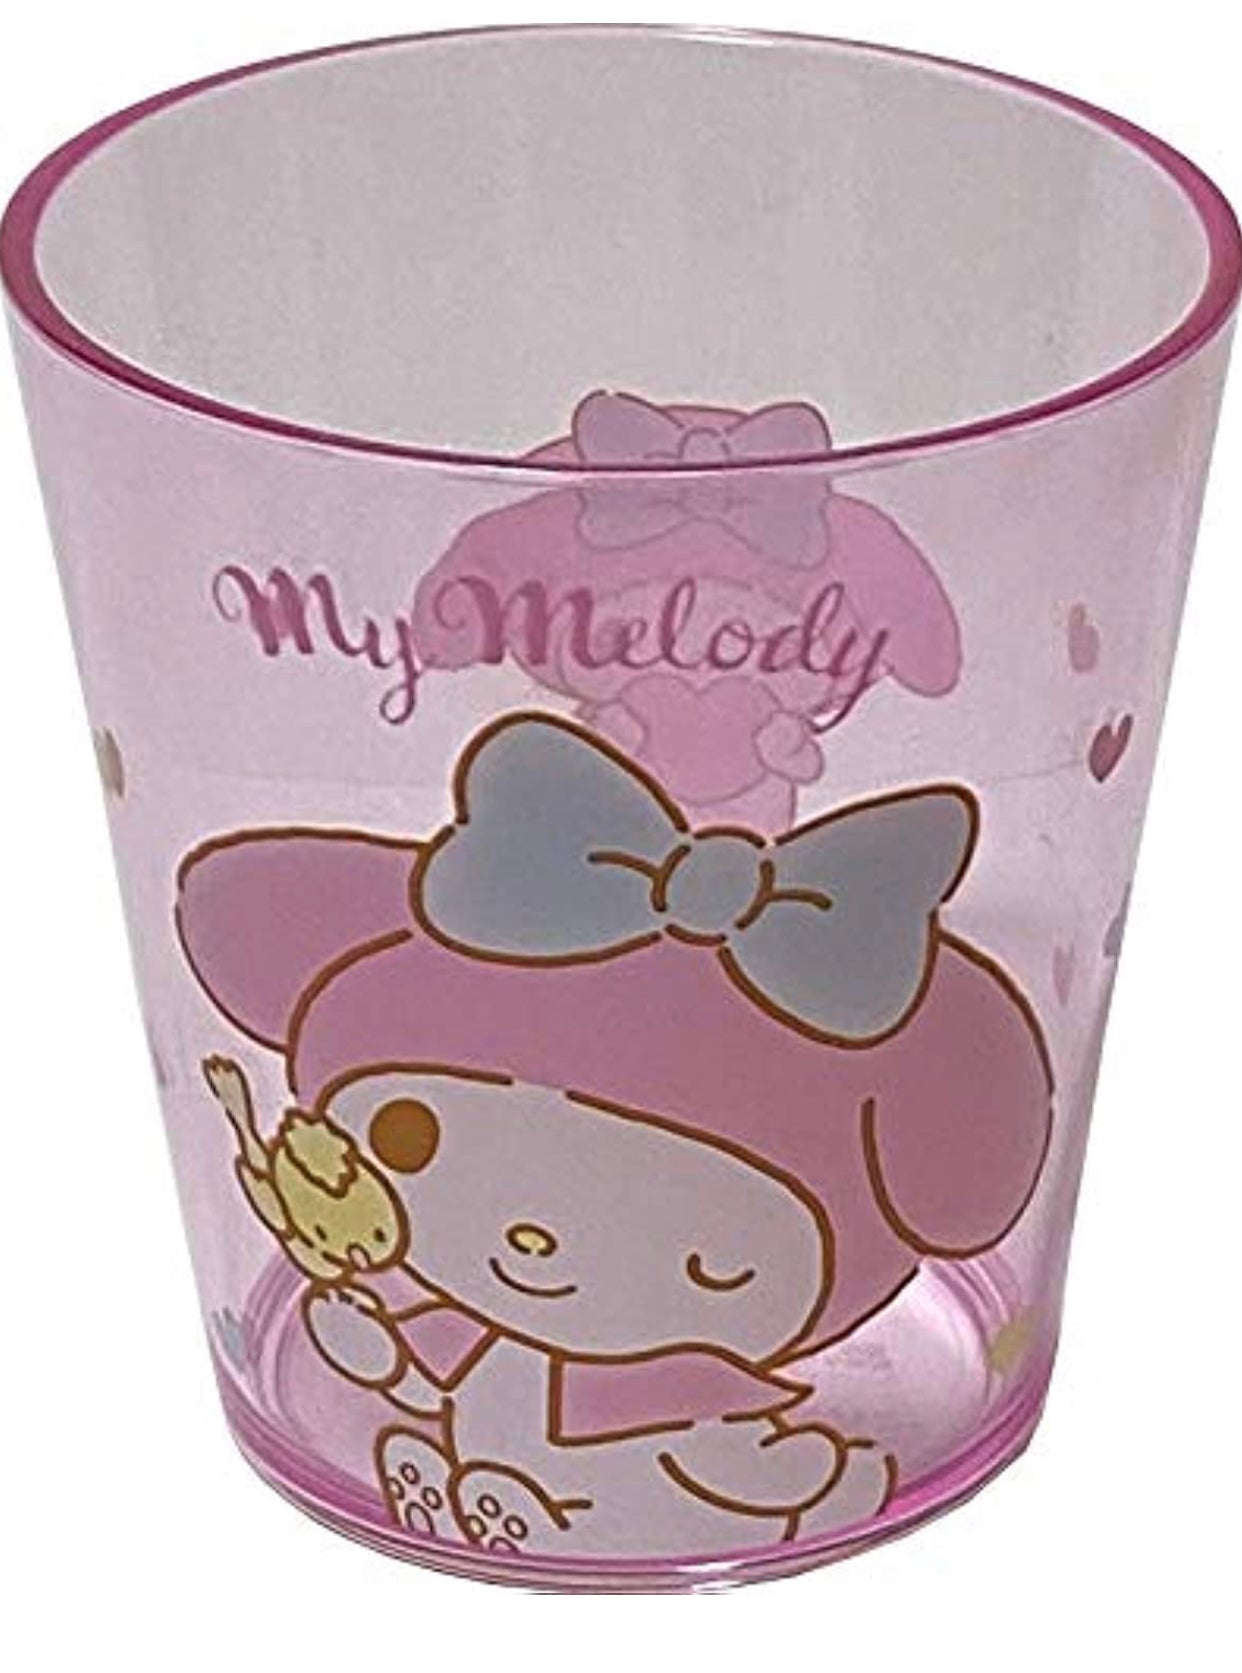 Sanrio Plastic Cup - My Melody - 8.79 fl oz, Pink